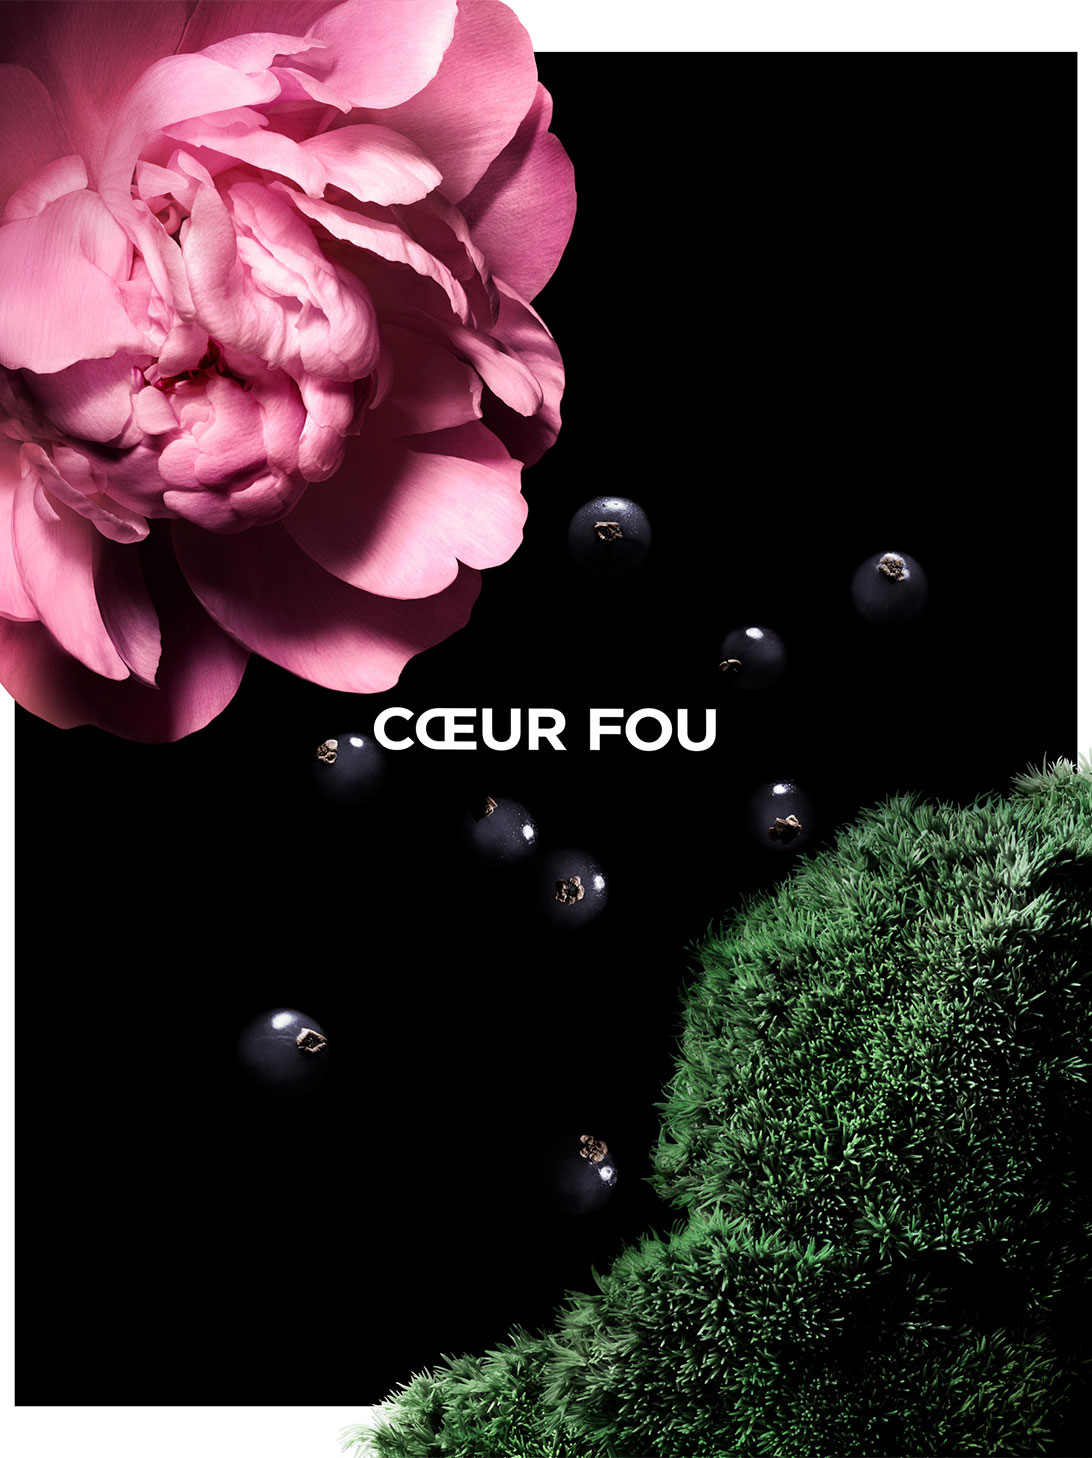 Givenchy Coeur Fou La Collection Particulière Olfactory Notes